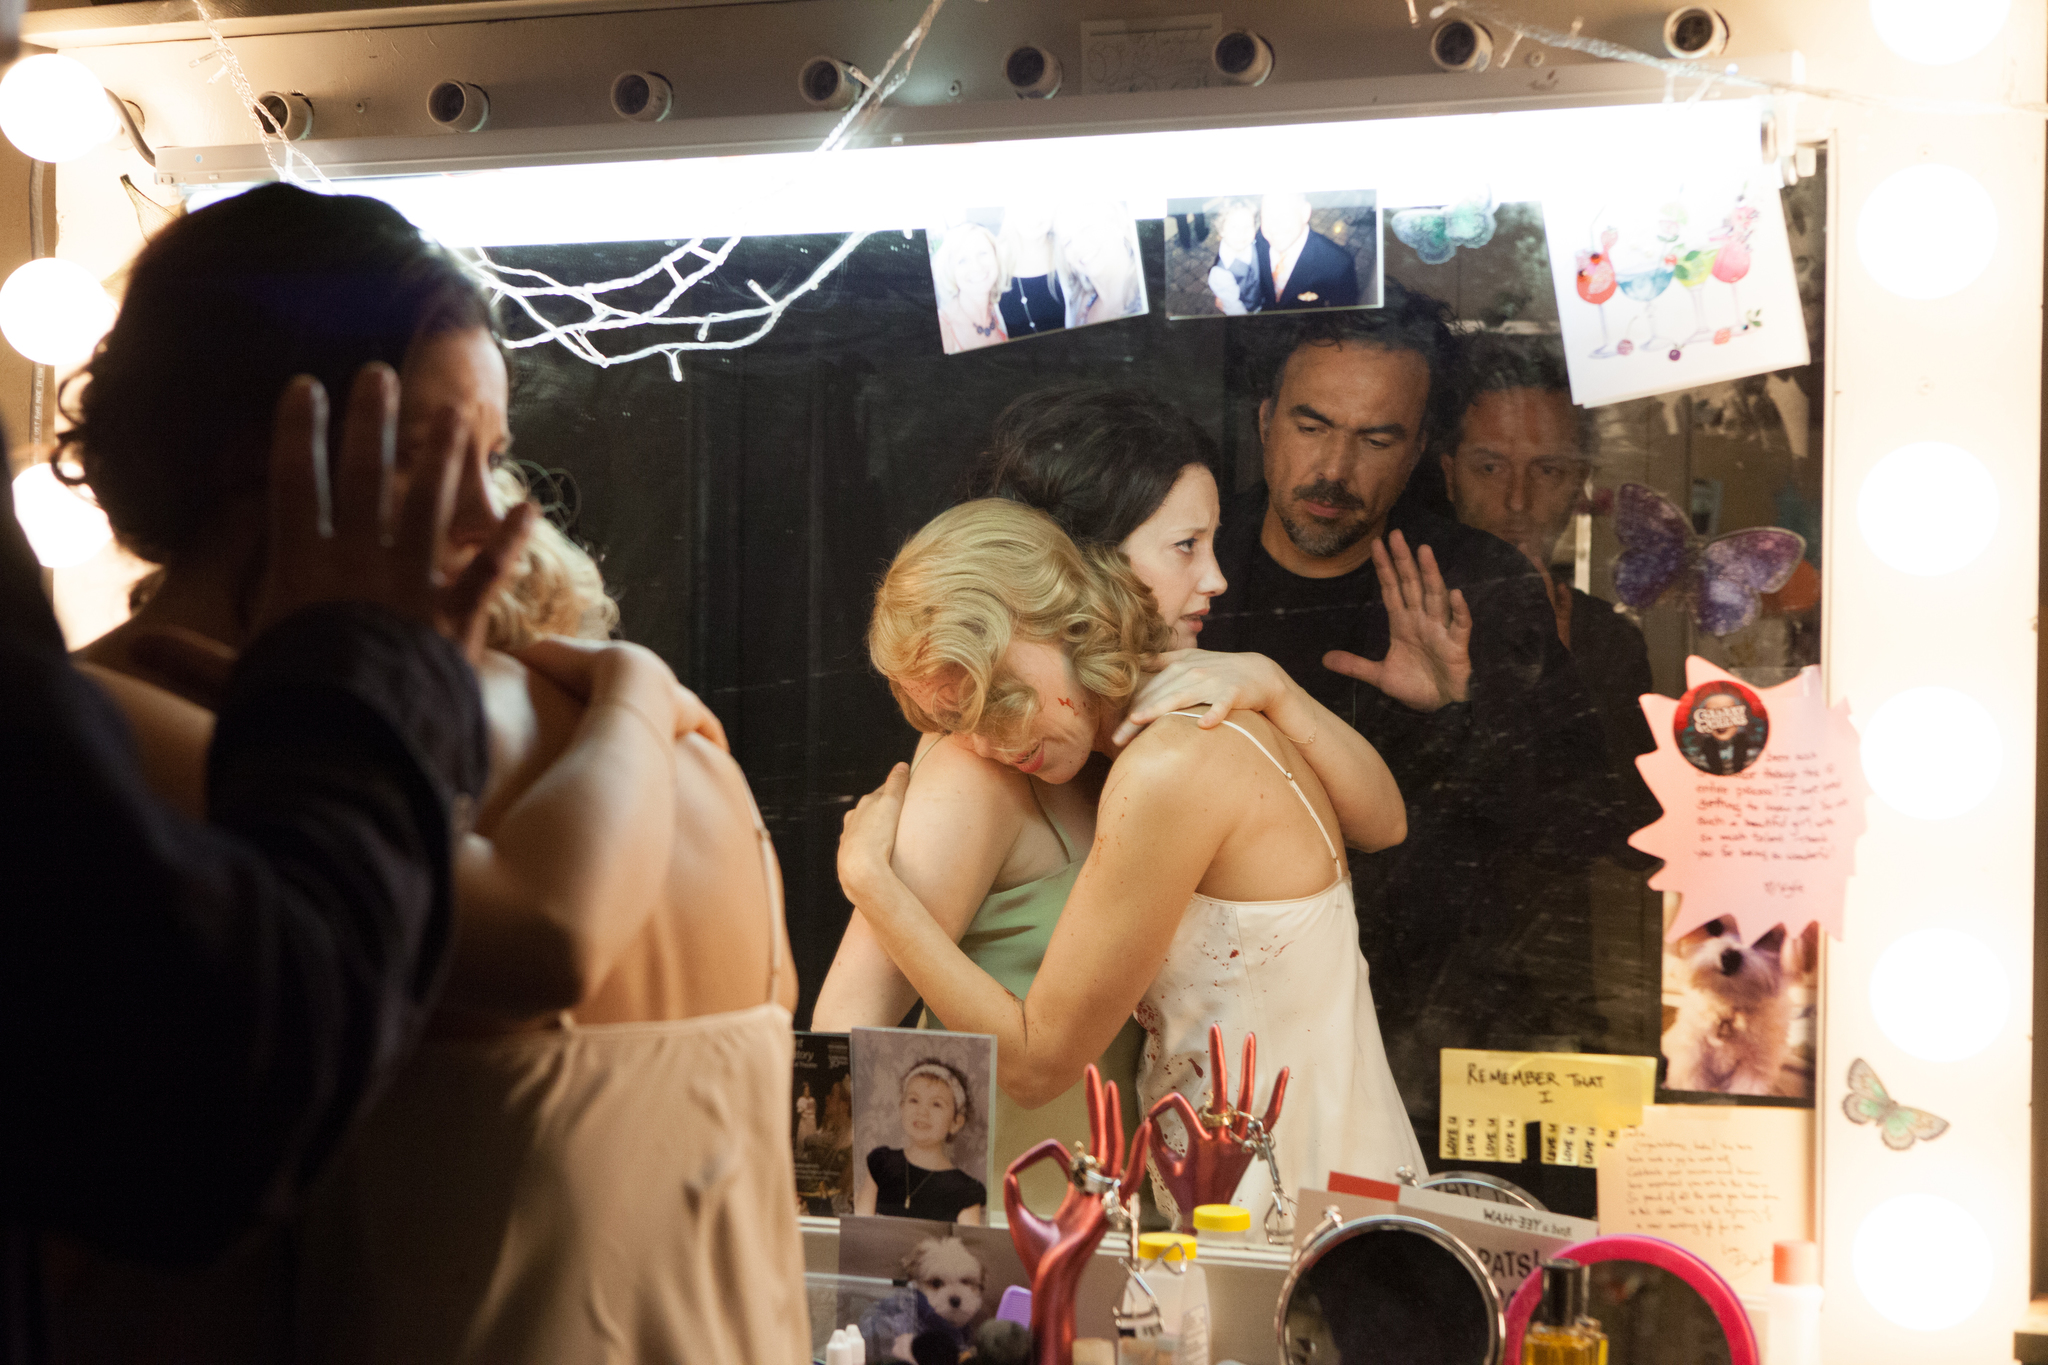 Emmanuel Lubezki, Naomi Watts and Andrea Riseborough in Zmogus-paukstis (2014)